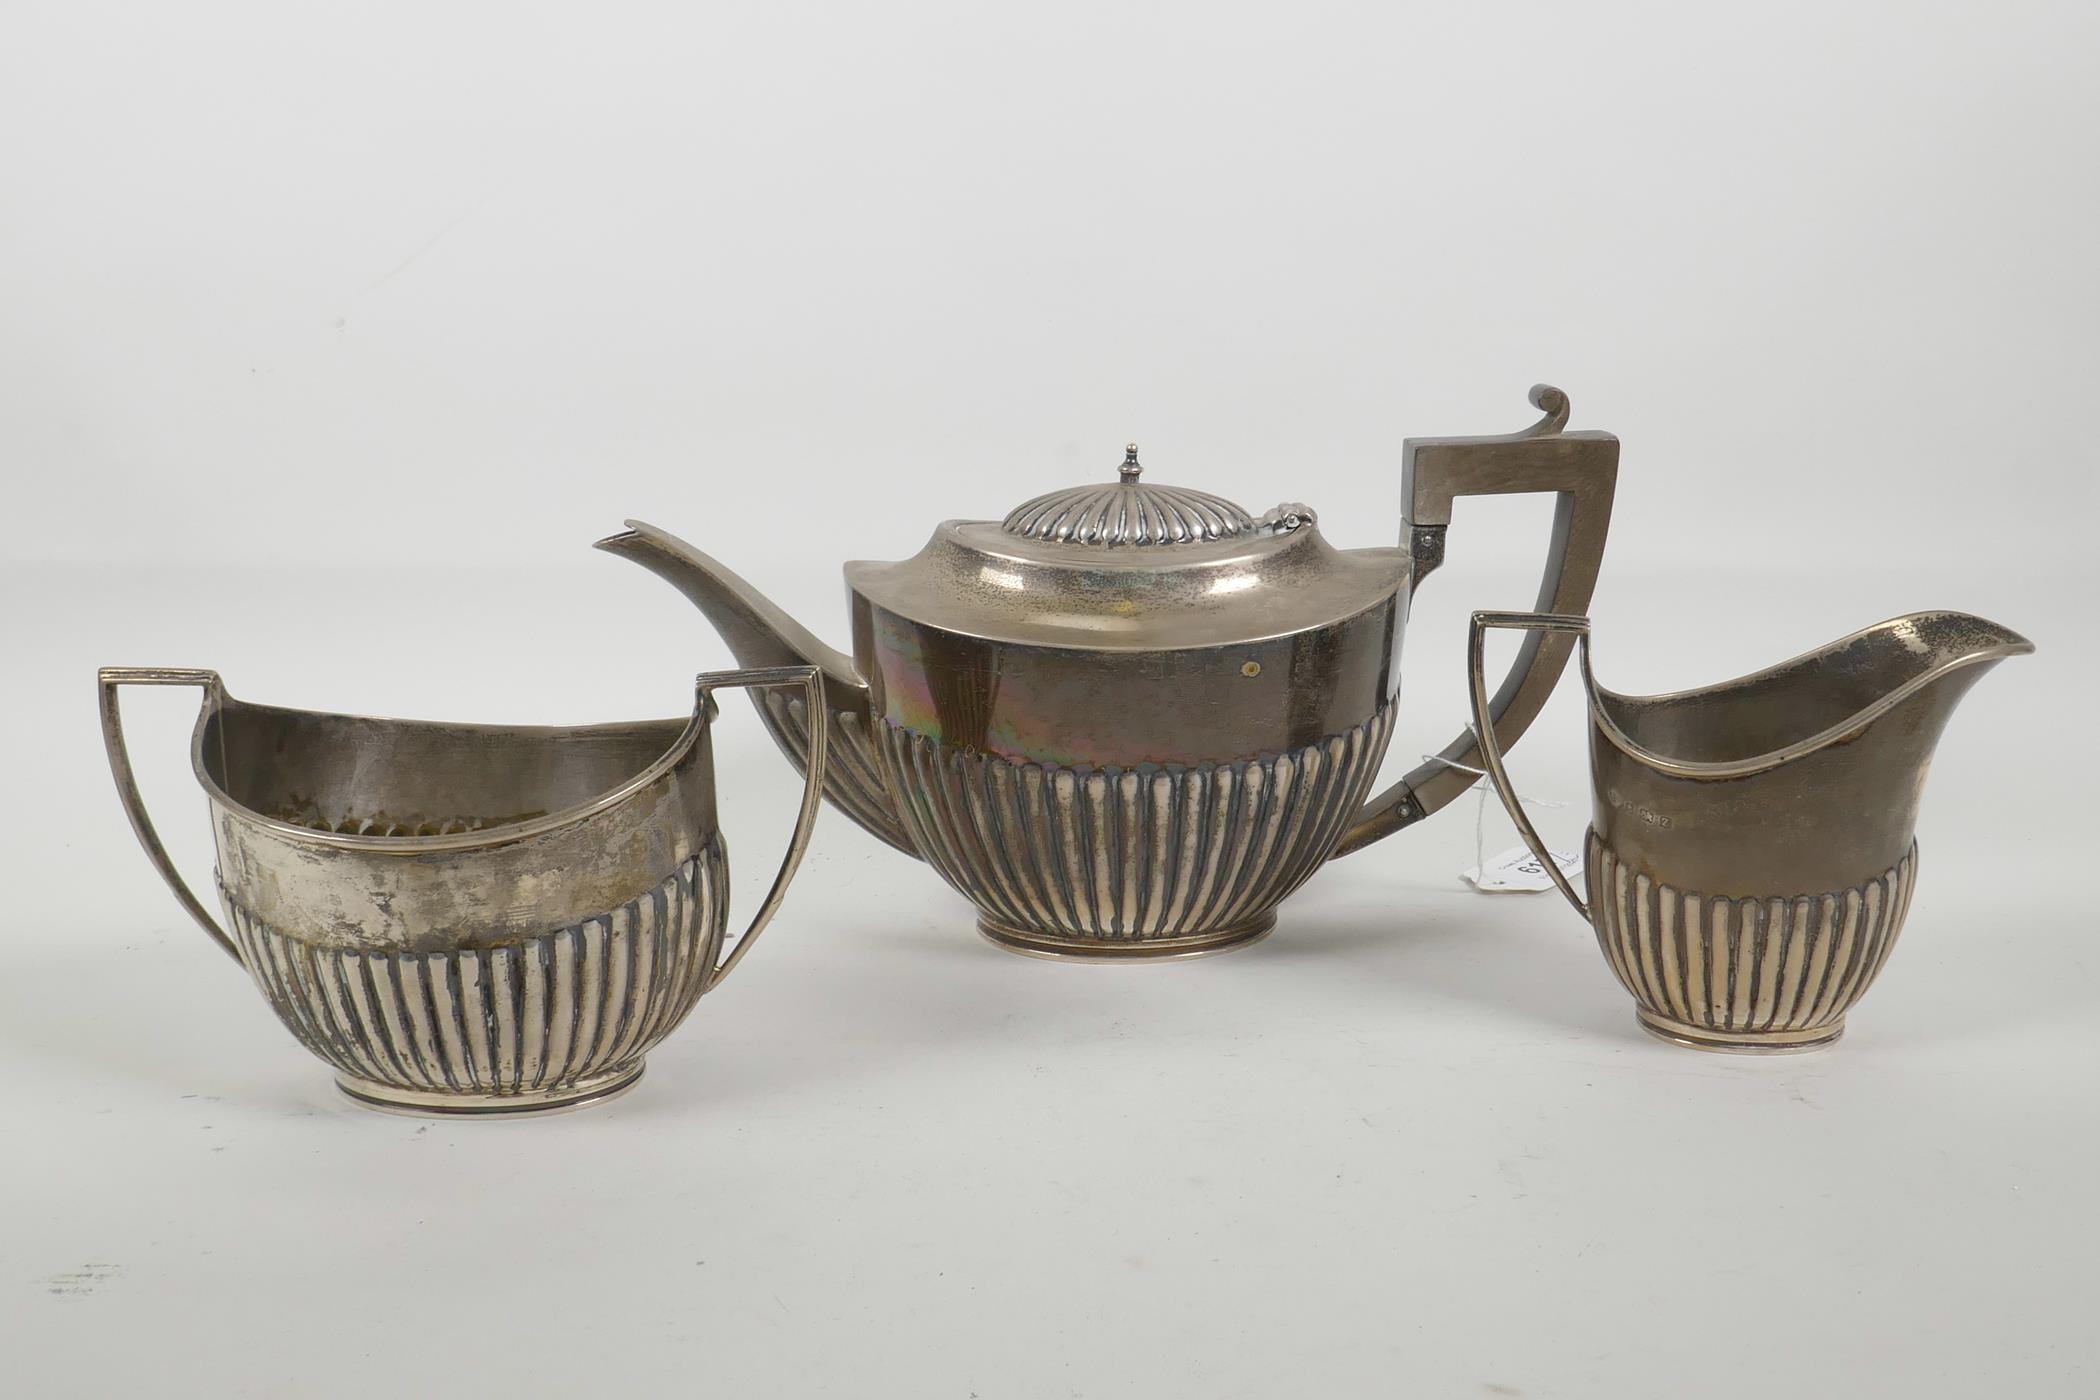 A silver Queen Anne style teapot, jug and sugar bowl by Alexander Clark & Co Ltd of Birmingham,